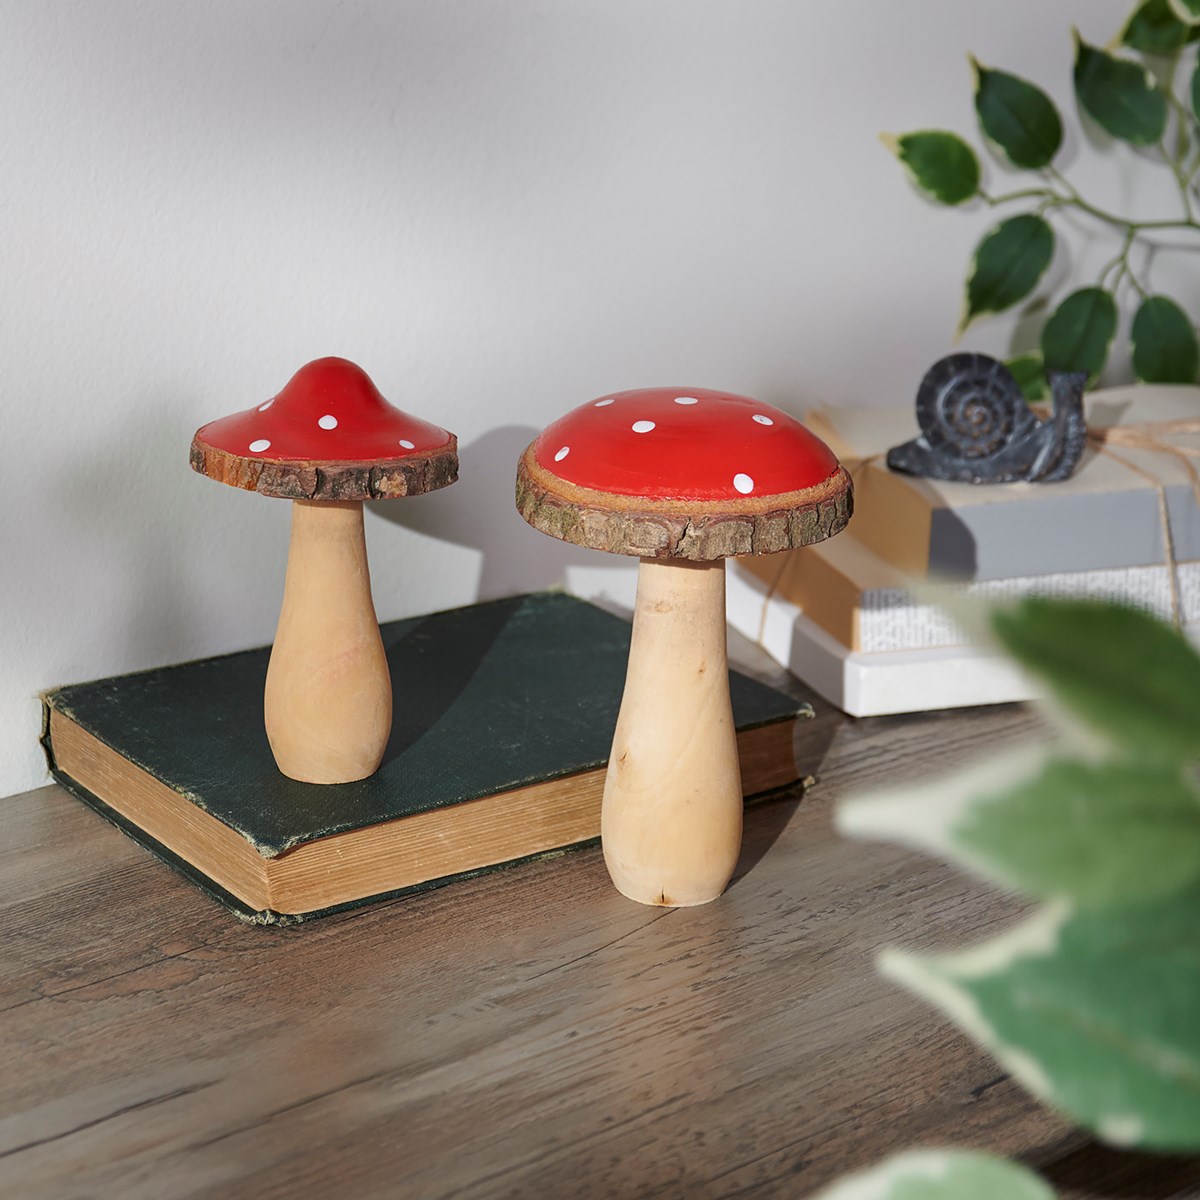 Red Mushrooms Sitter Set - Wood